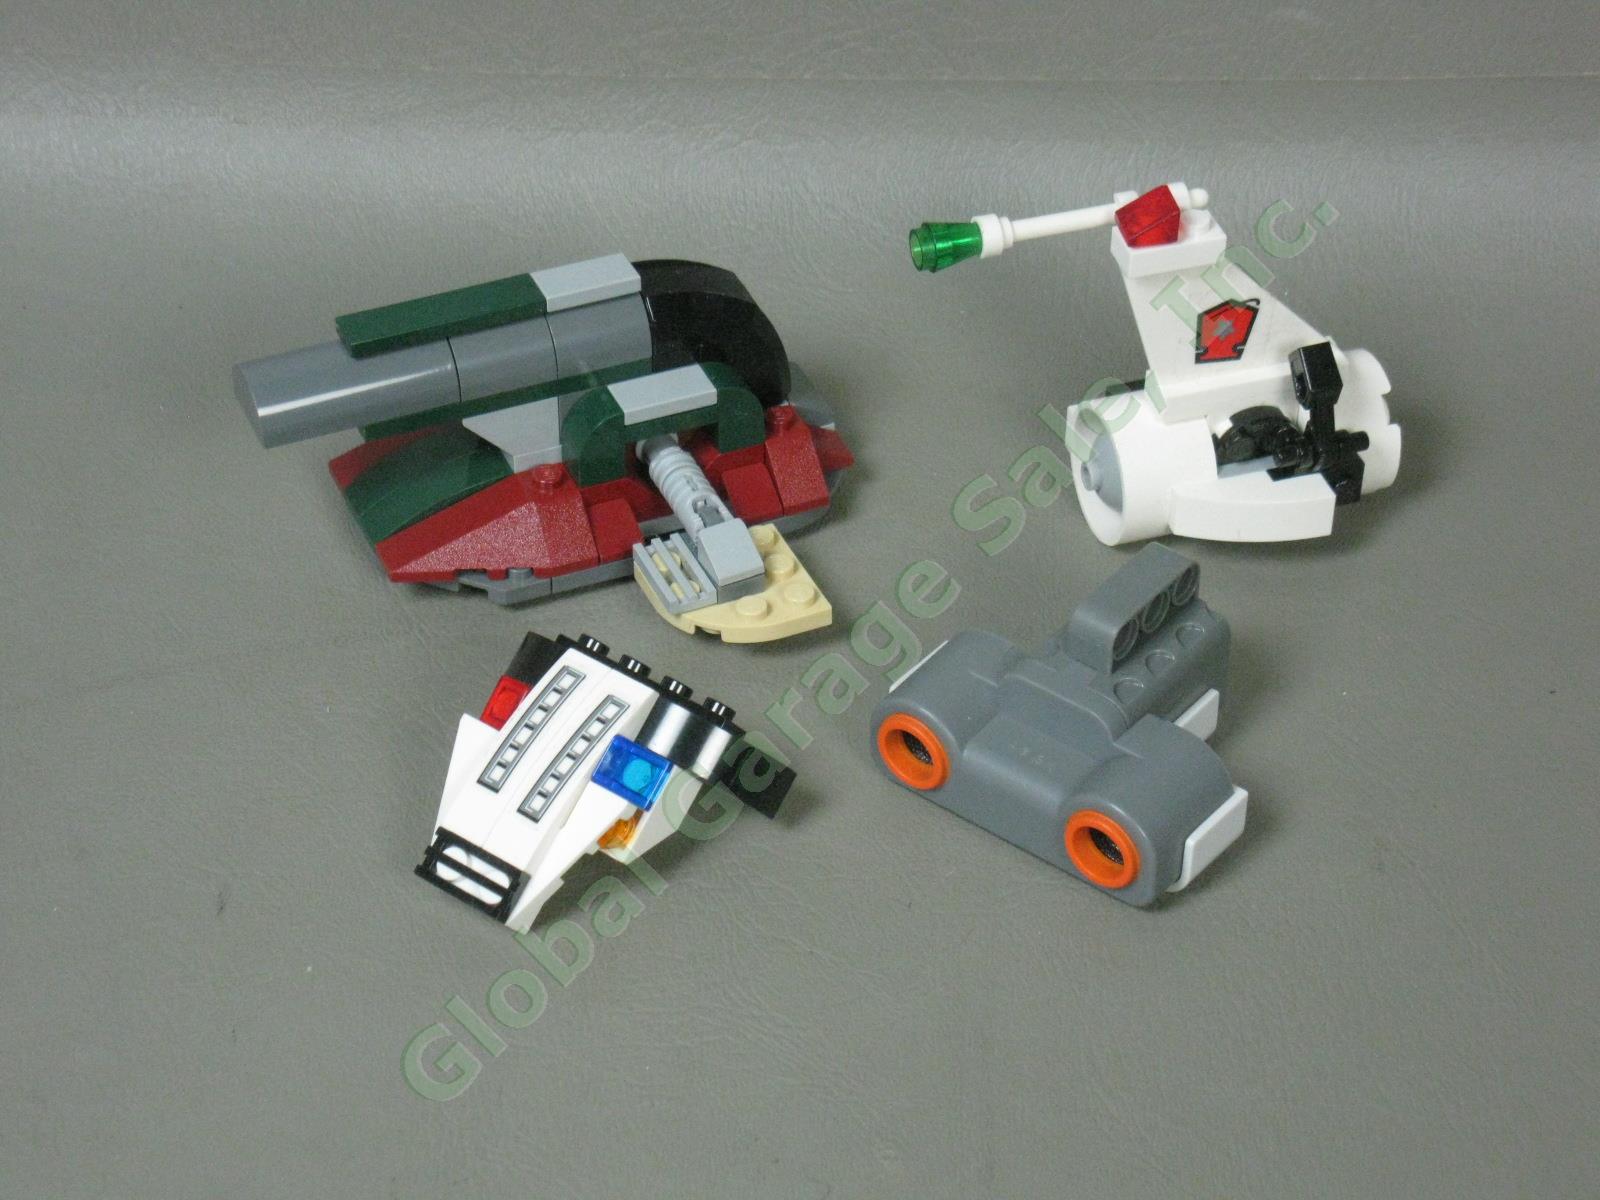 Lego Mindstorms NXT 2.0 8547 Robot Building Set Windows/Mac w/Original Box NR! 9